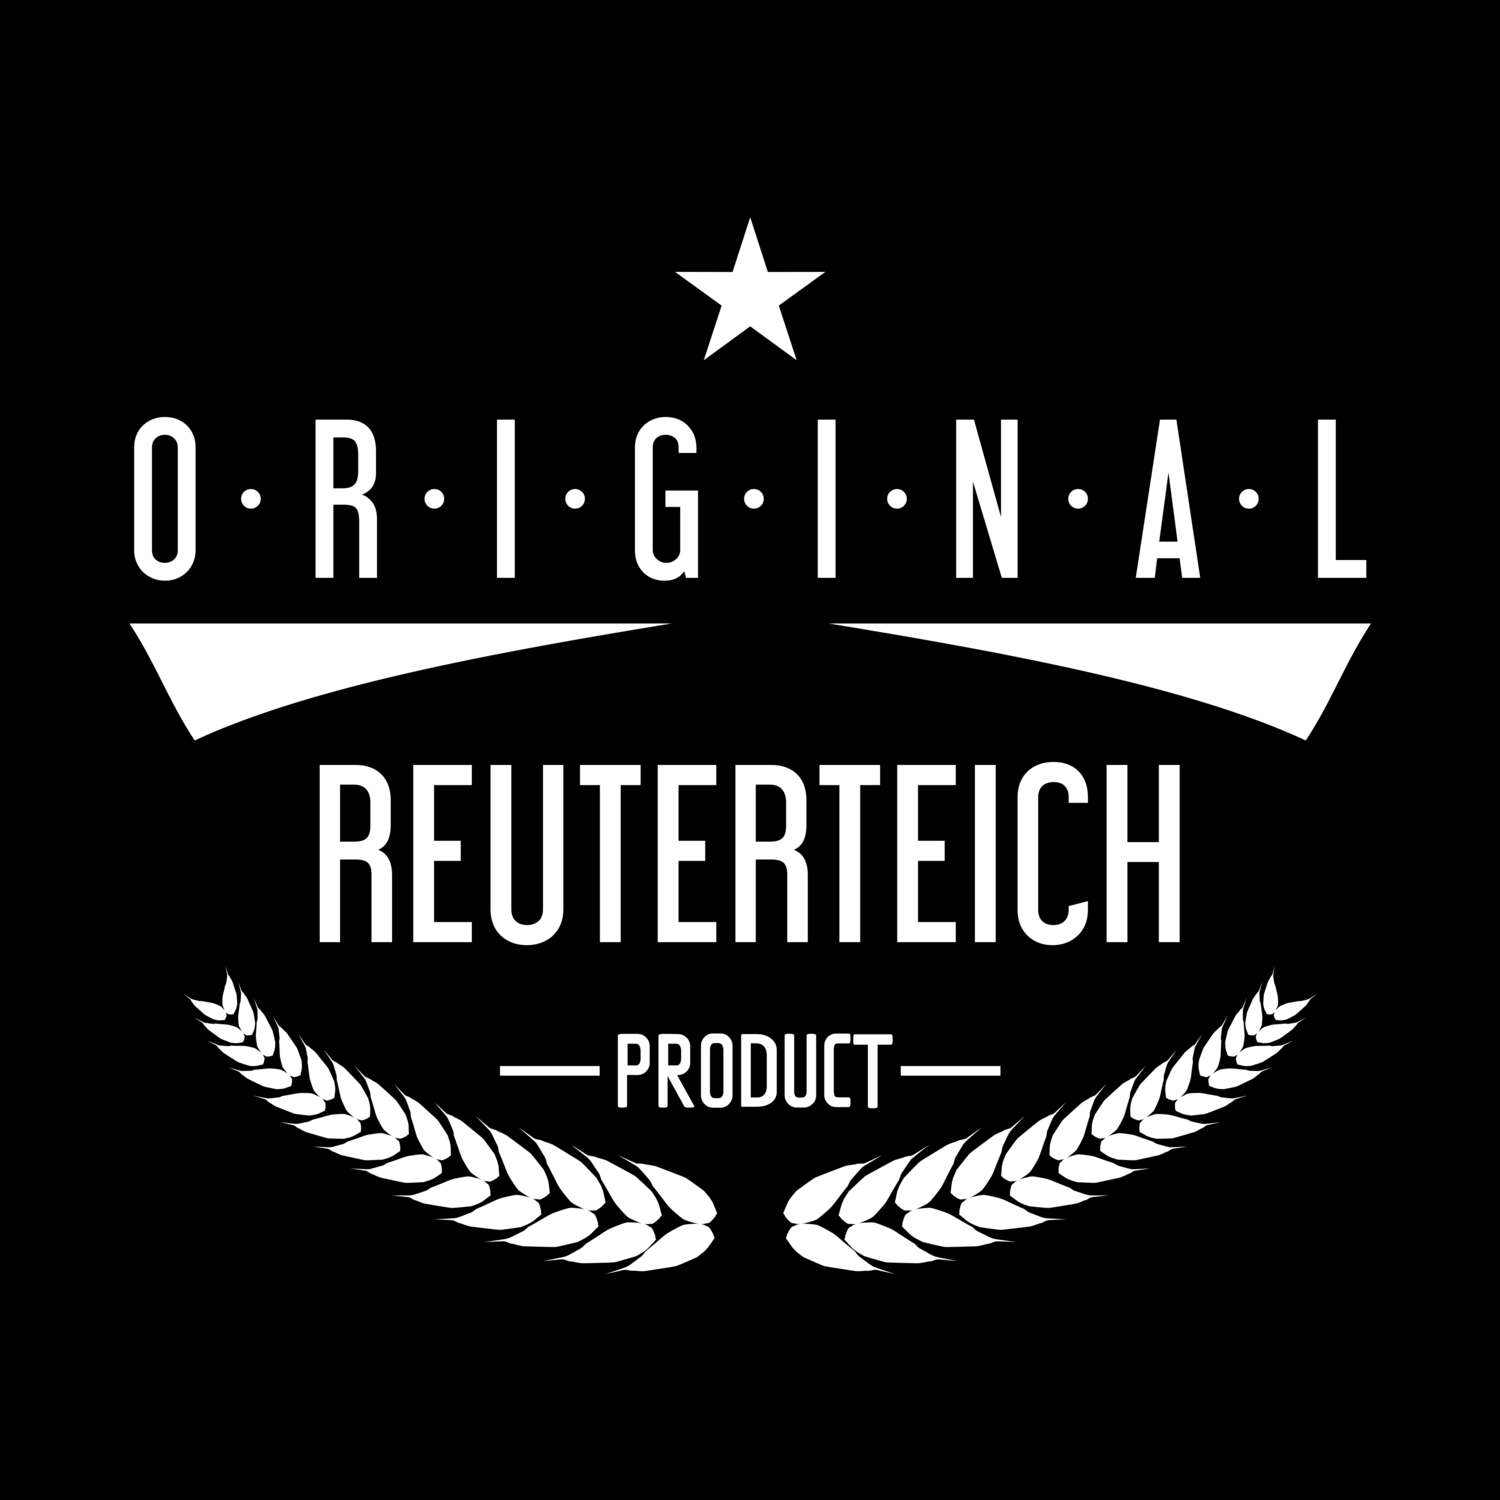 Reuterteich T-Shirt »Original Product«